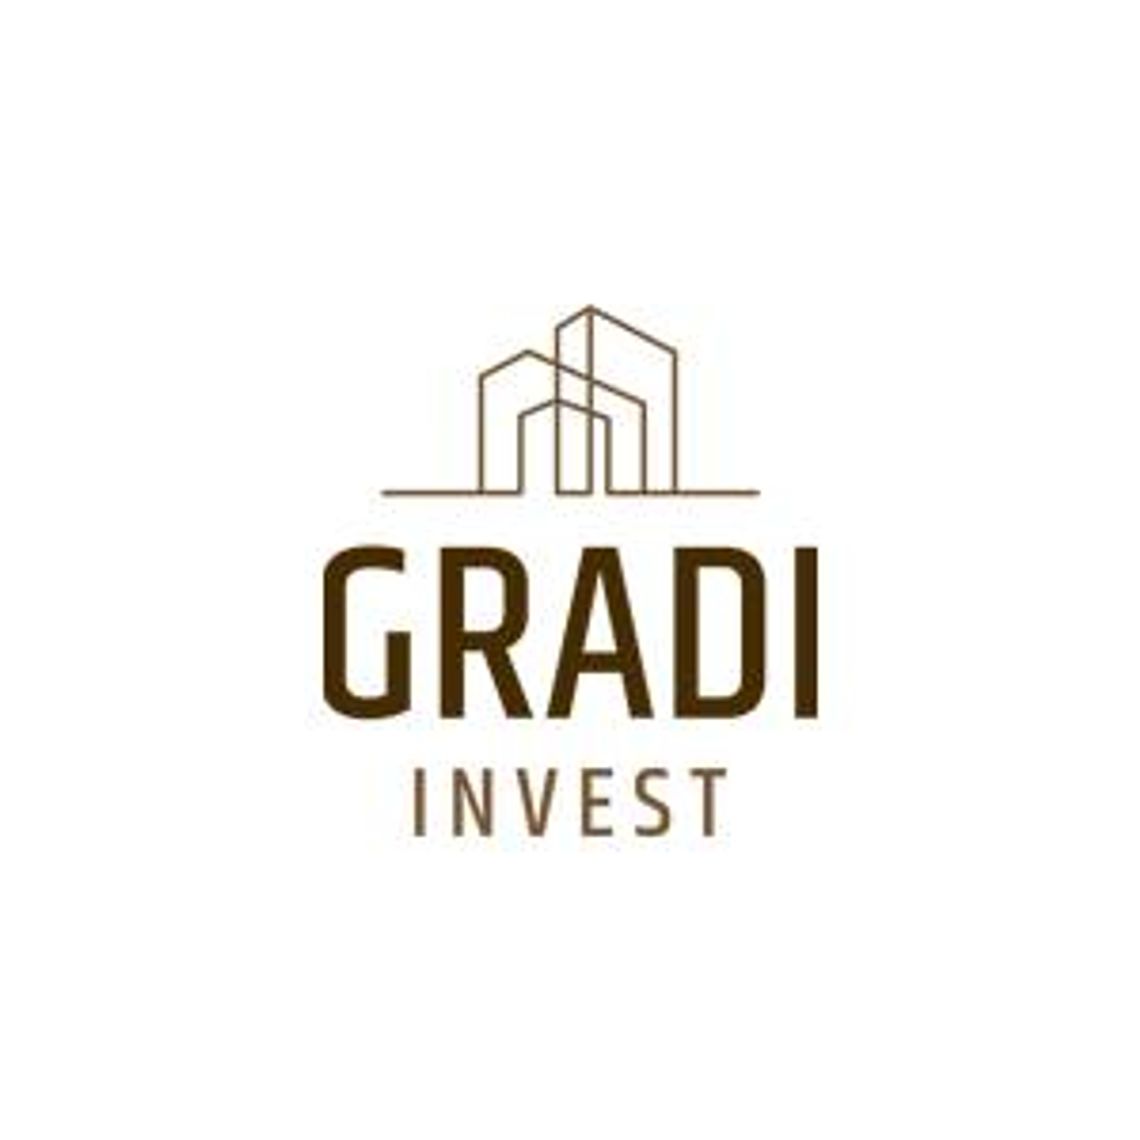 Deweloper budowlany - Gradi Invest